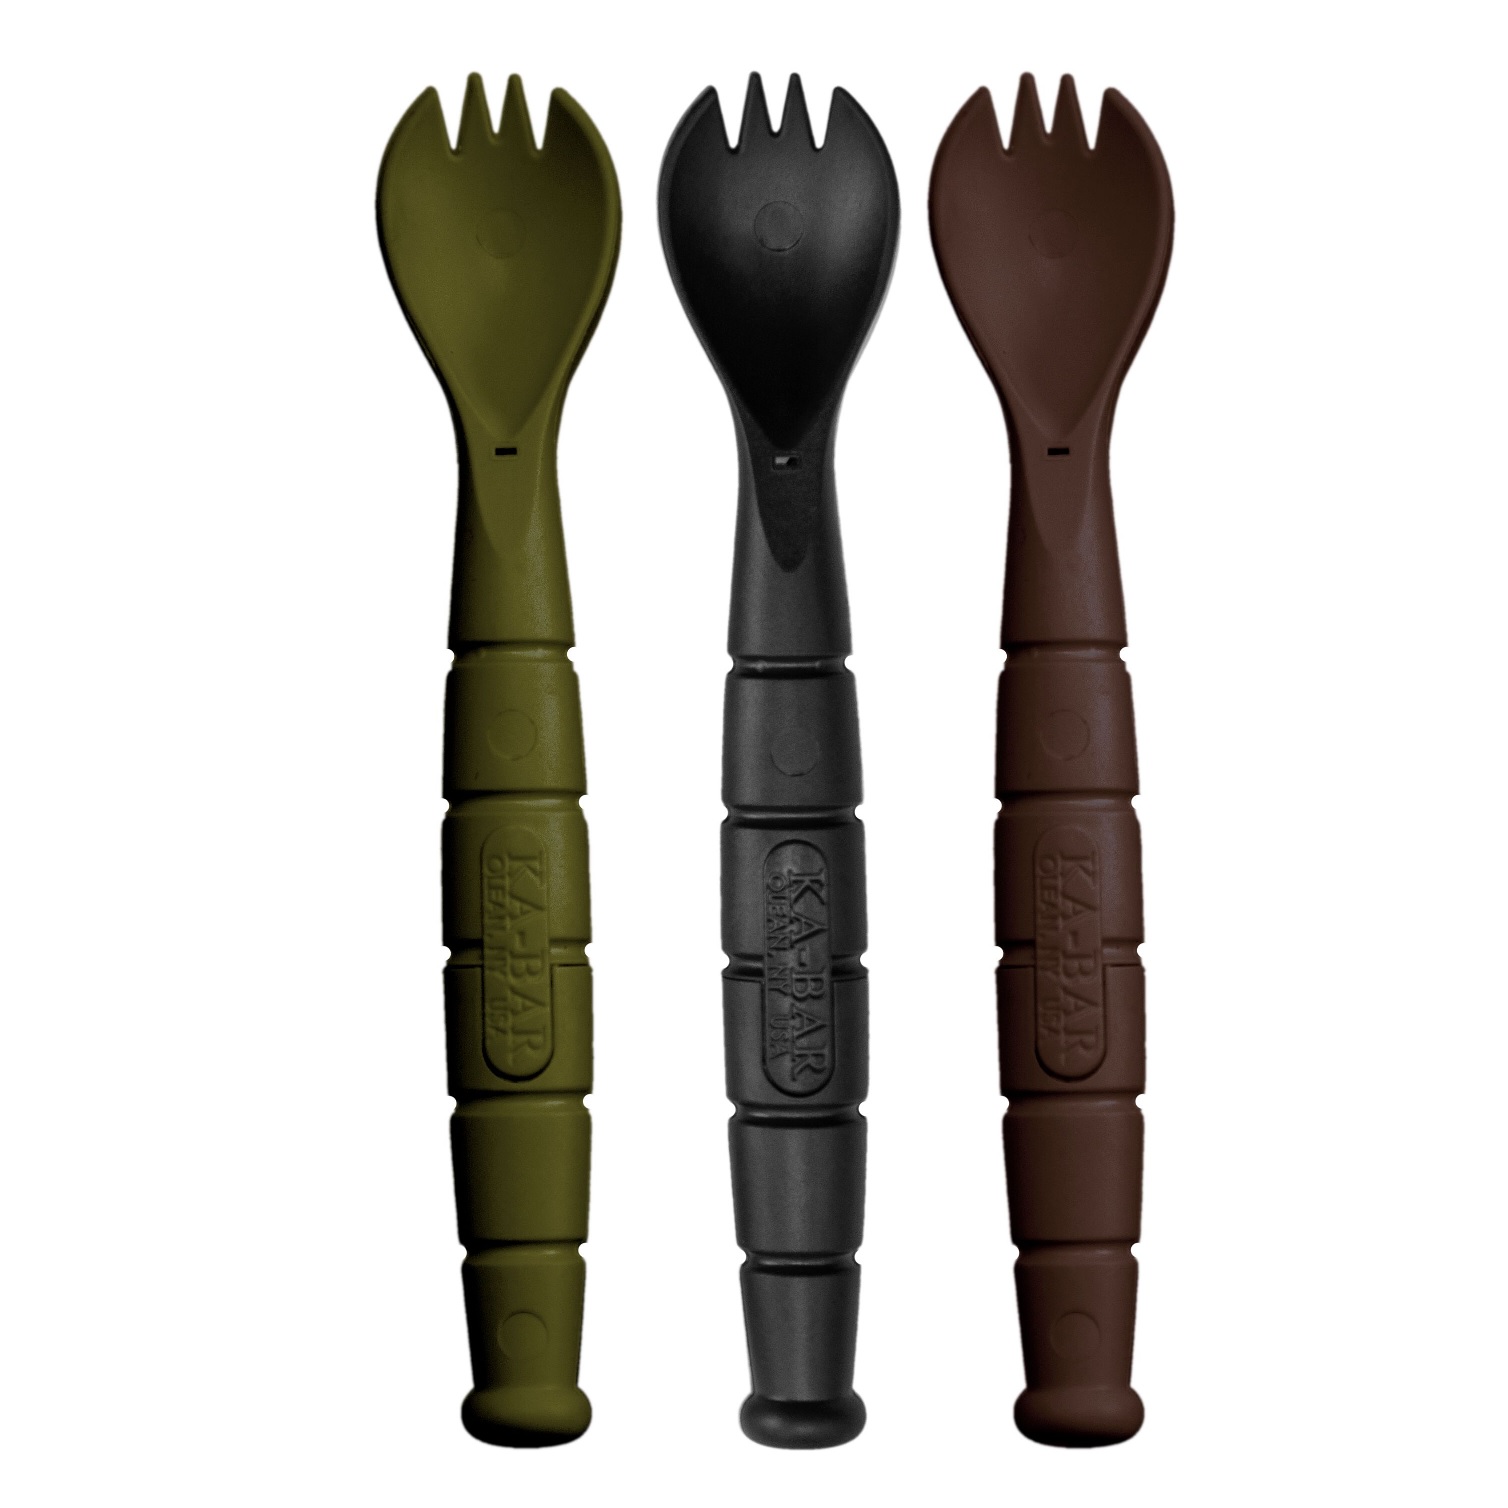 KA-BAR Tactical Spork (Spoon Fork Knife) Field Kit 3 Pack